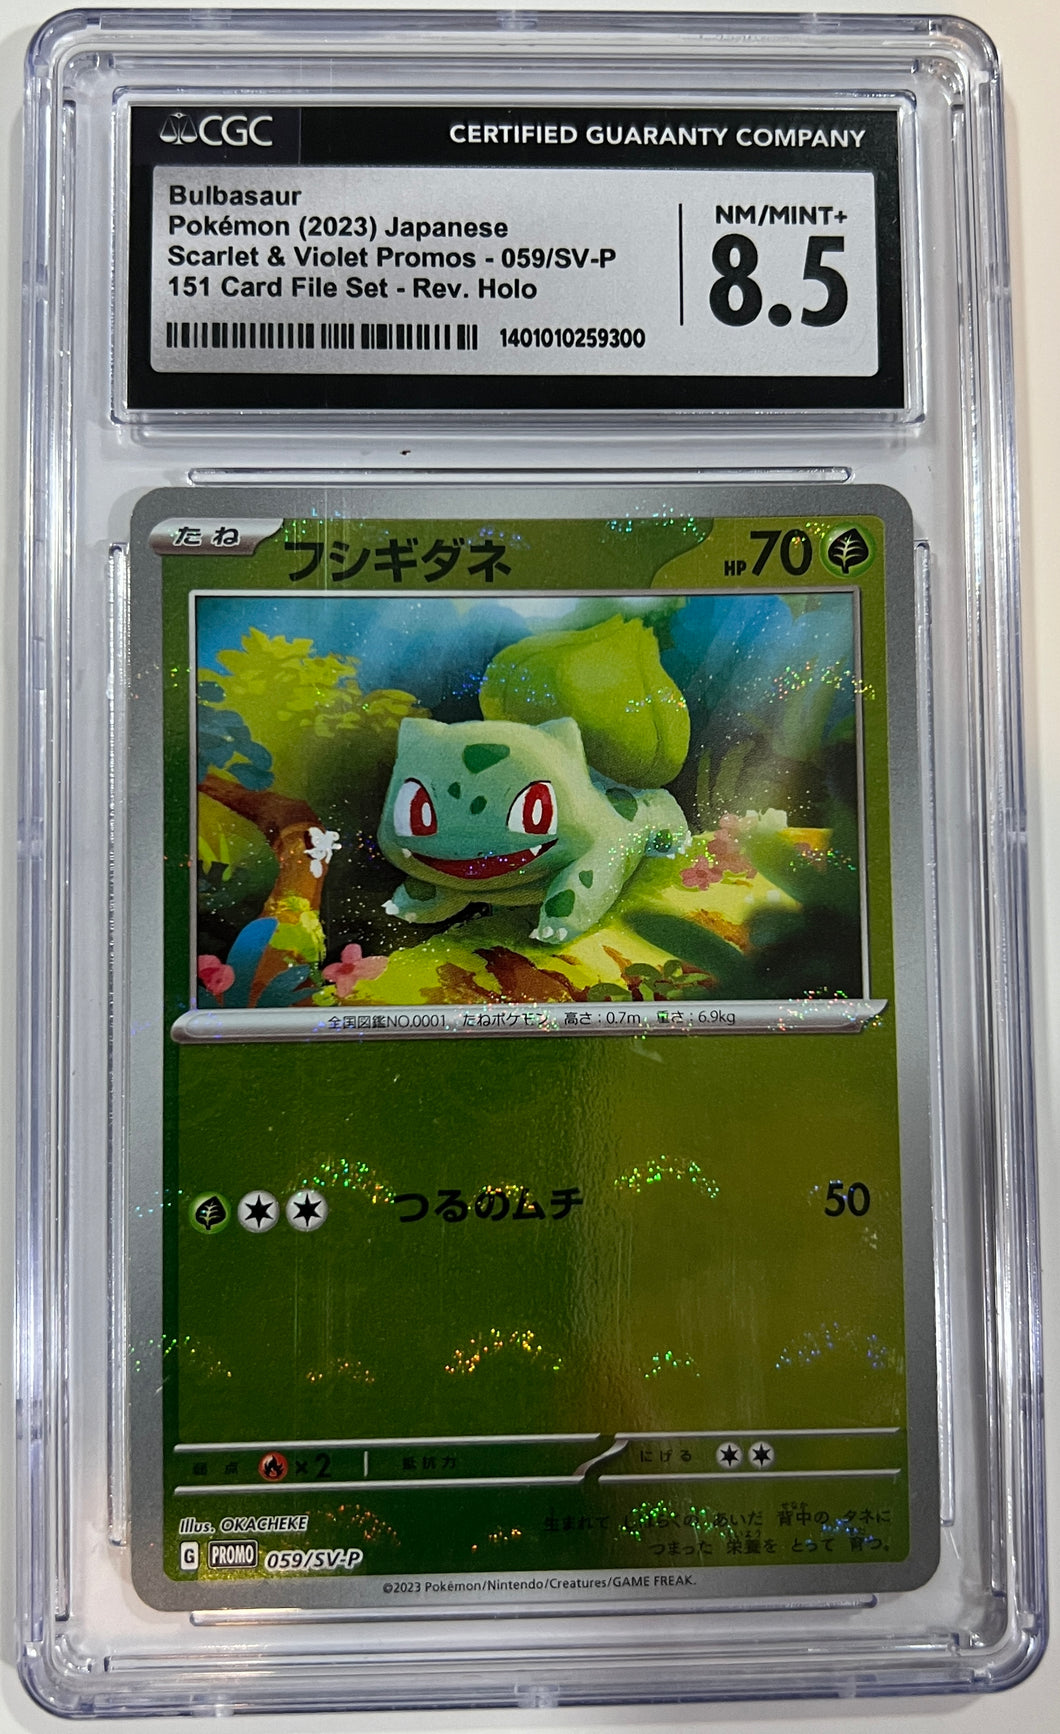 Bulbasaur 059 S&V Promo Japanese Pokemon Reverse Holo 151 Card File Set CGC 8.5 Near Mint